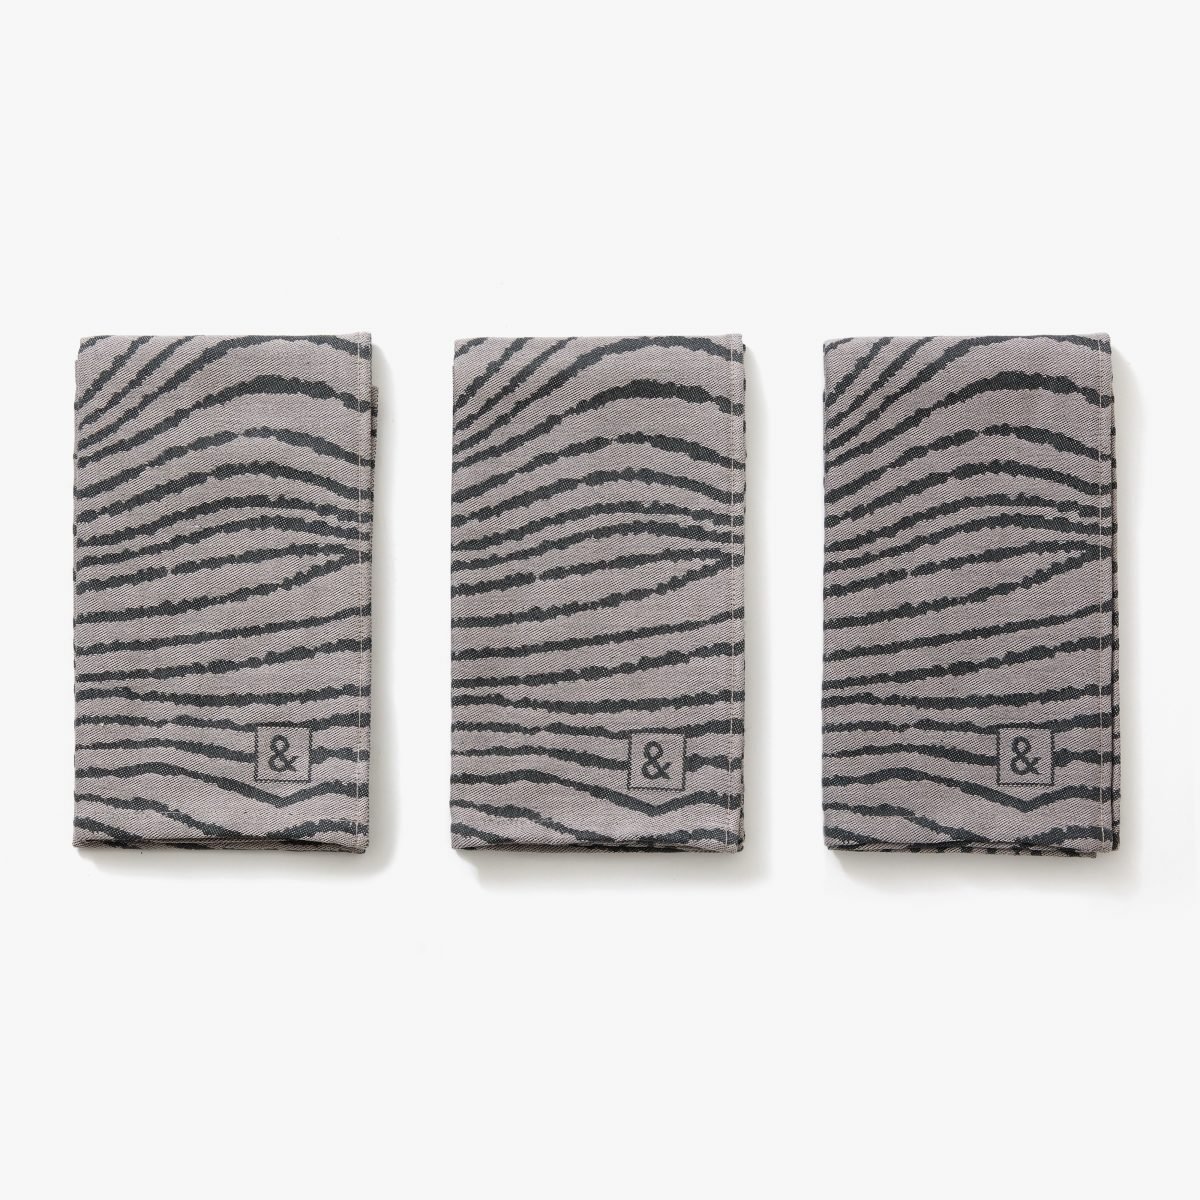 A trio of kitchen towels that look like beskar